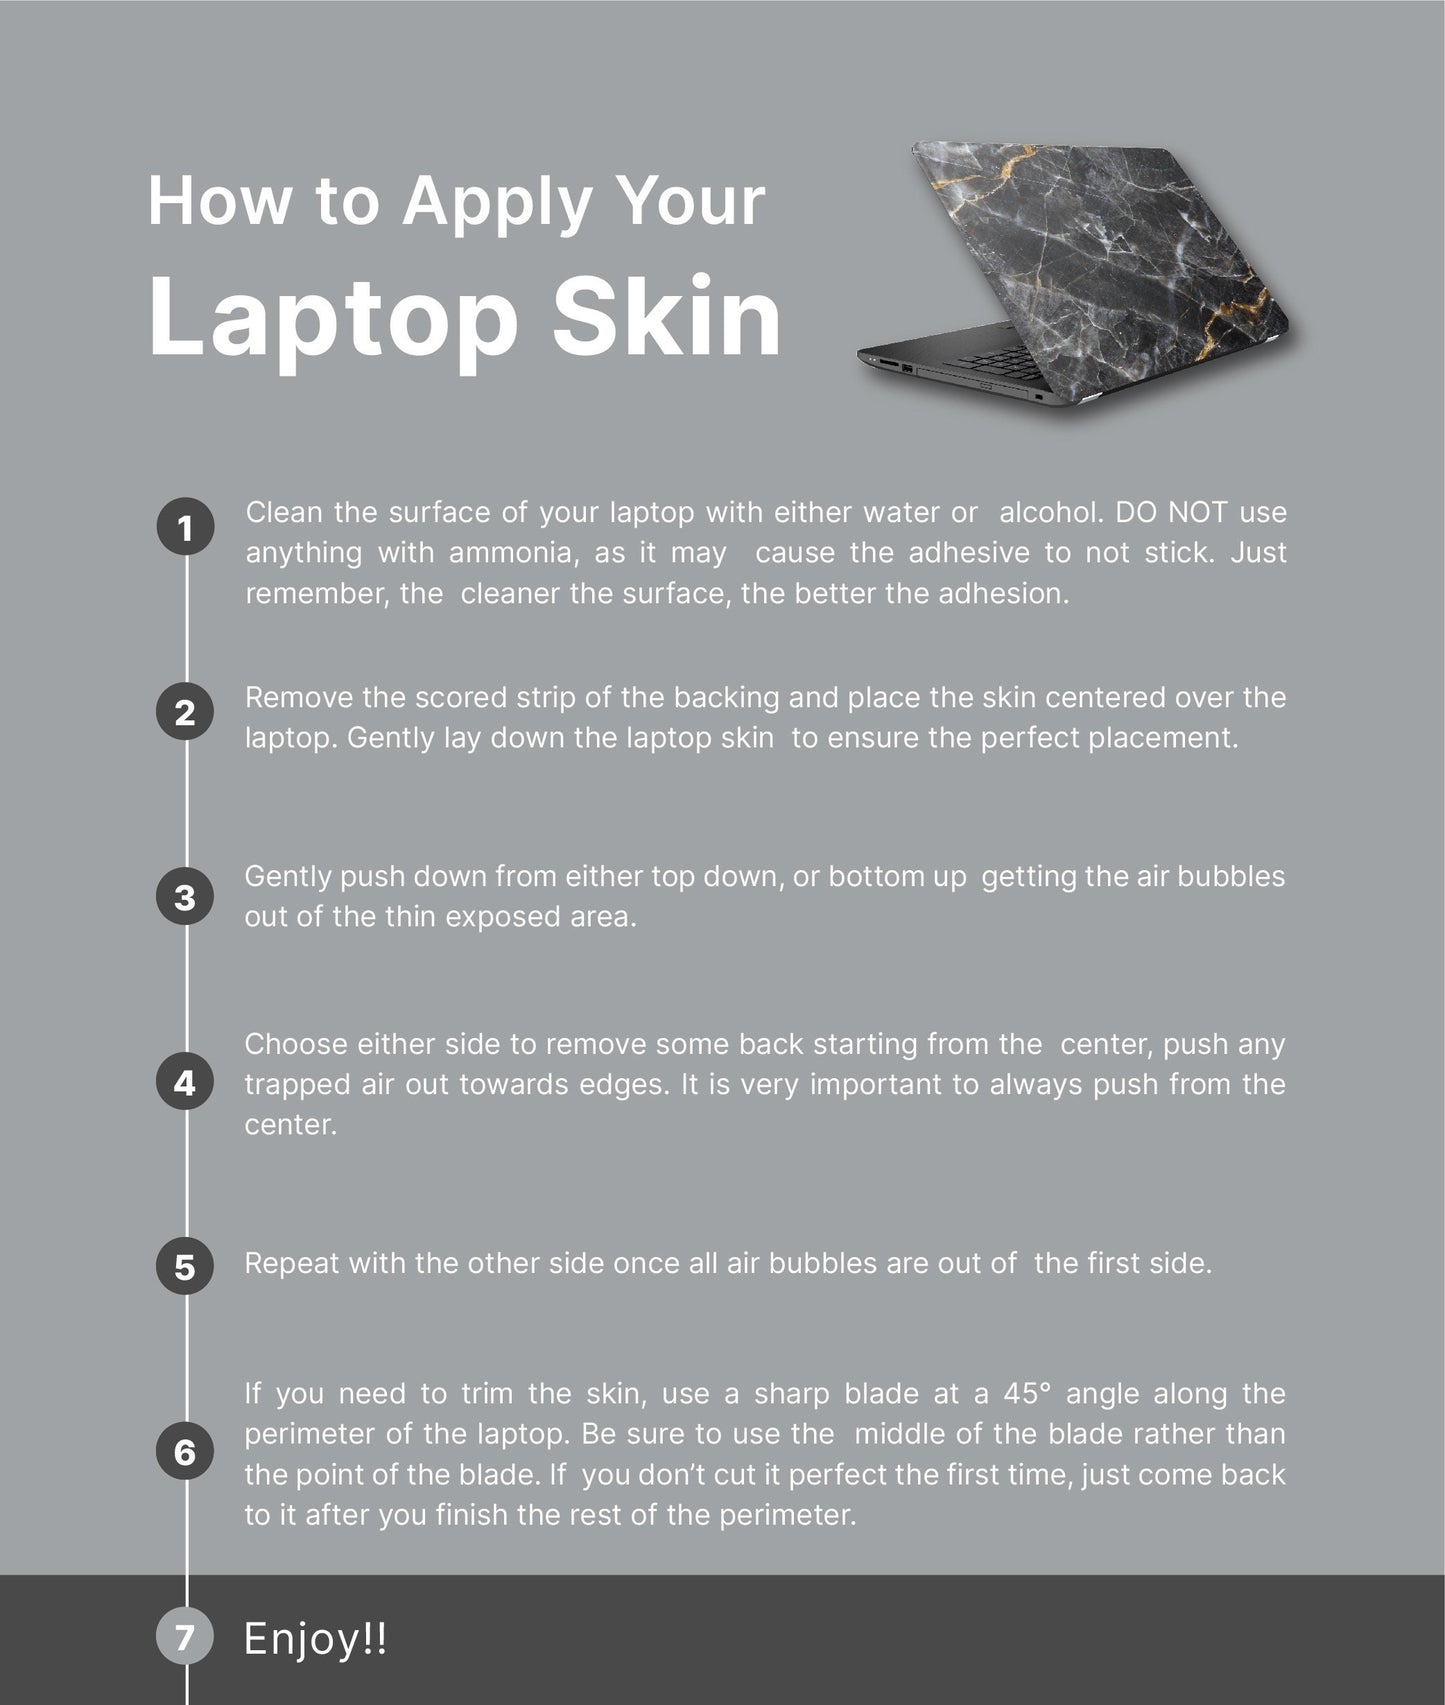 Tropical Foliage Laptop Skin, Laptop Cover, Laptop Skins, Removable Laptop Skins, Laptop Decal, Customized Laptop Skin, Laptop Stickers 246